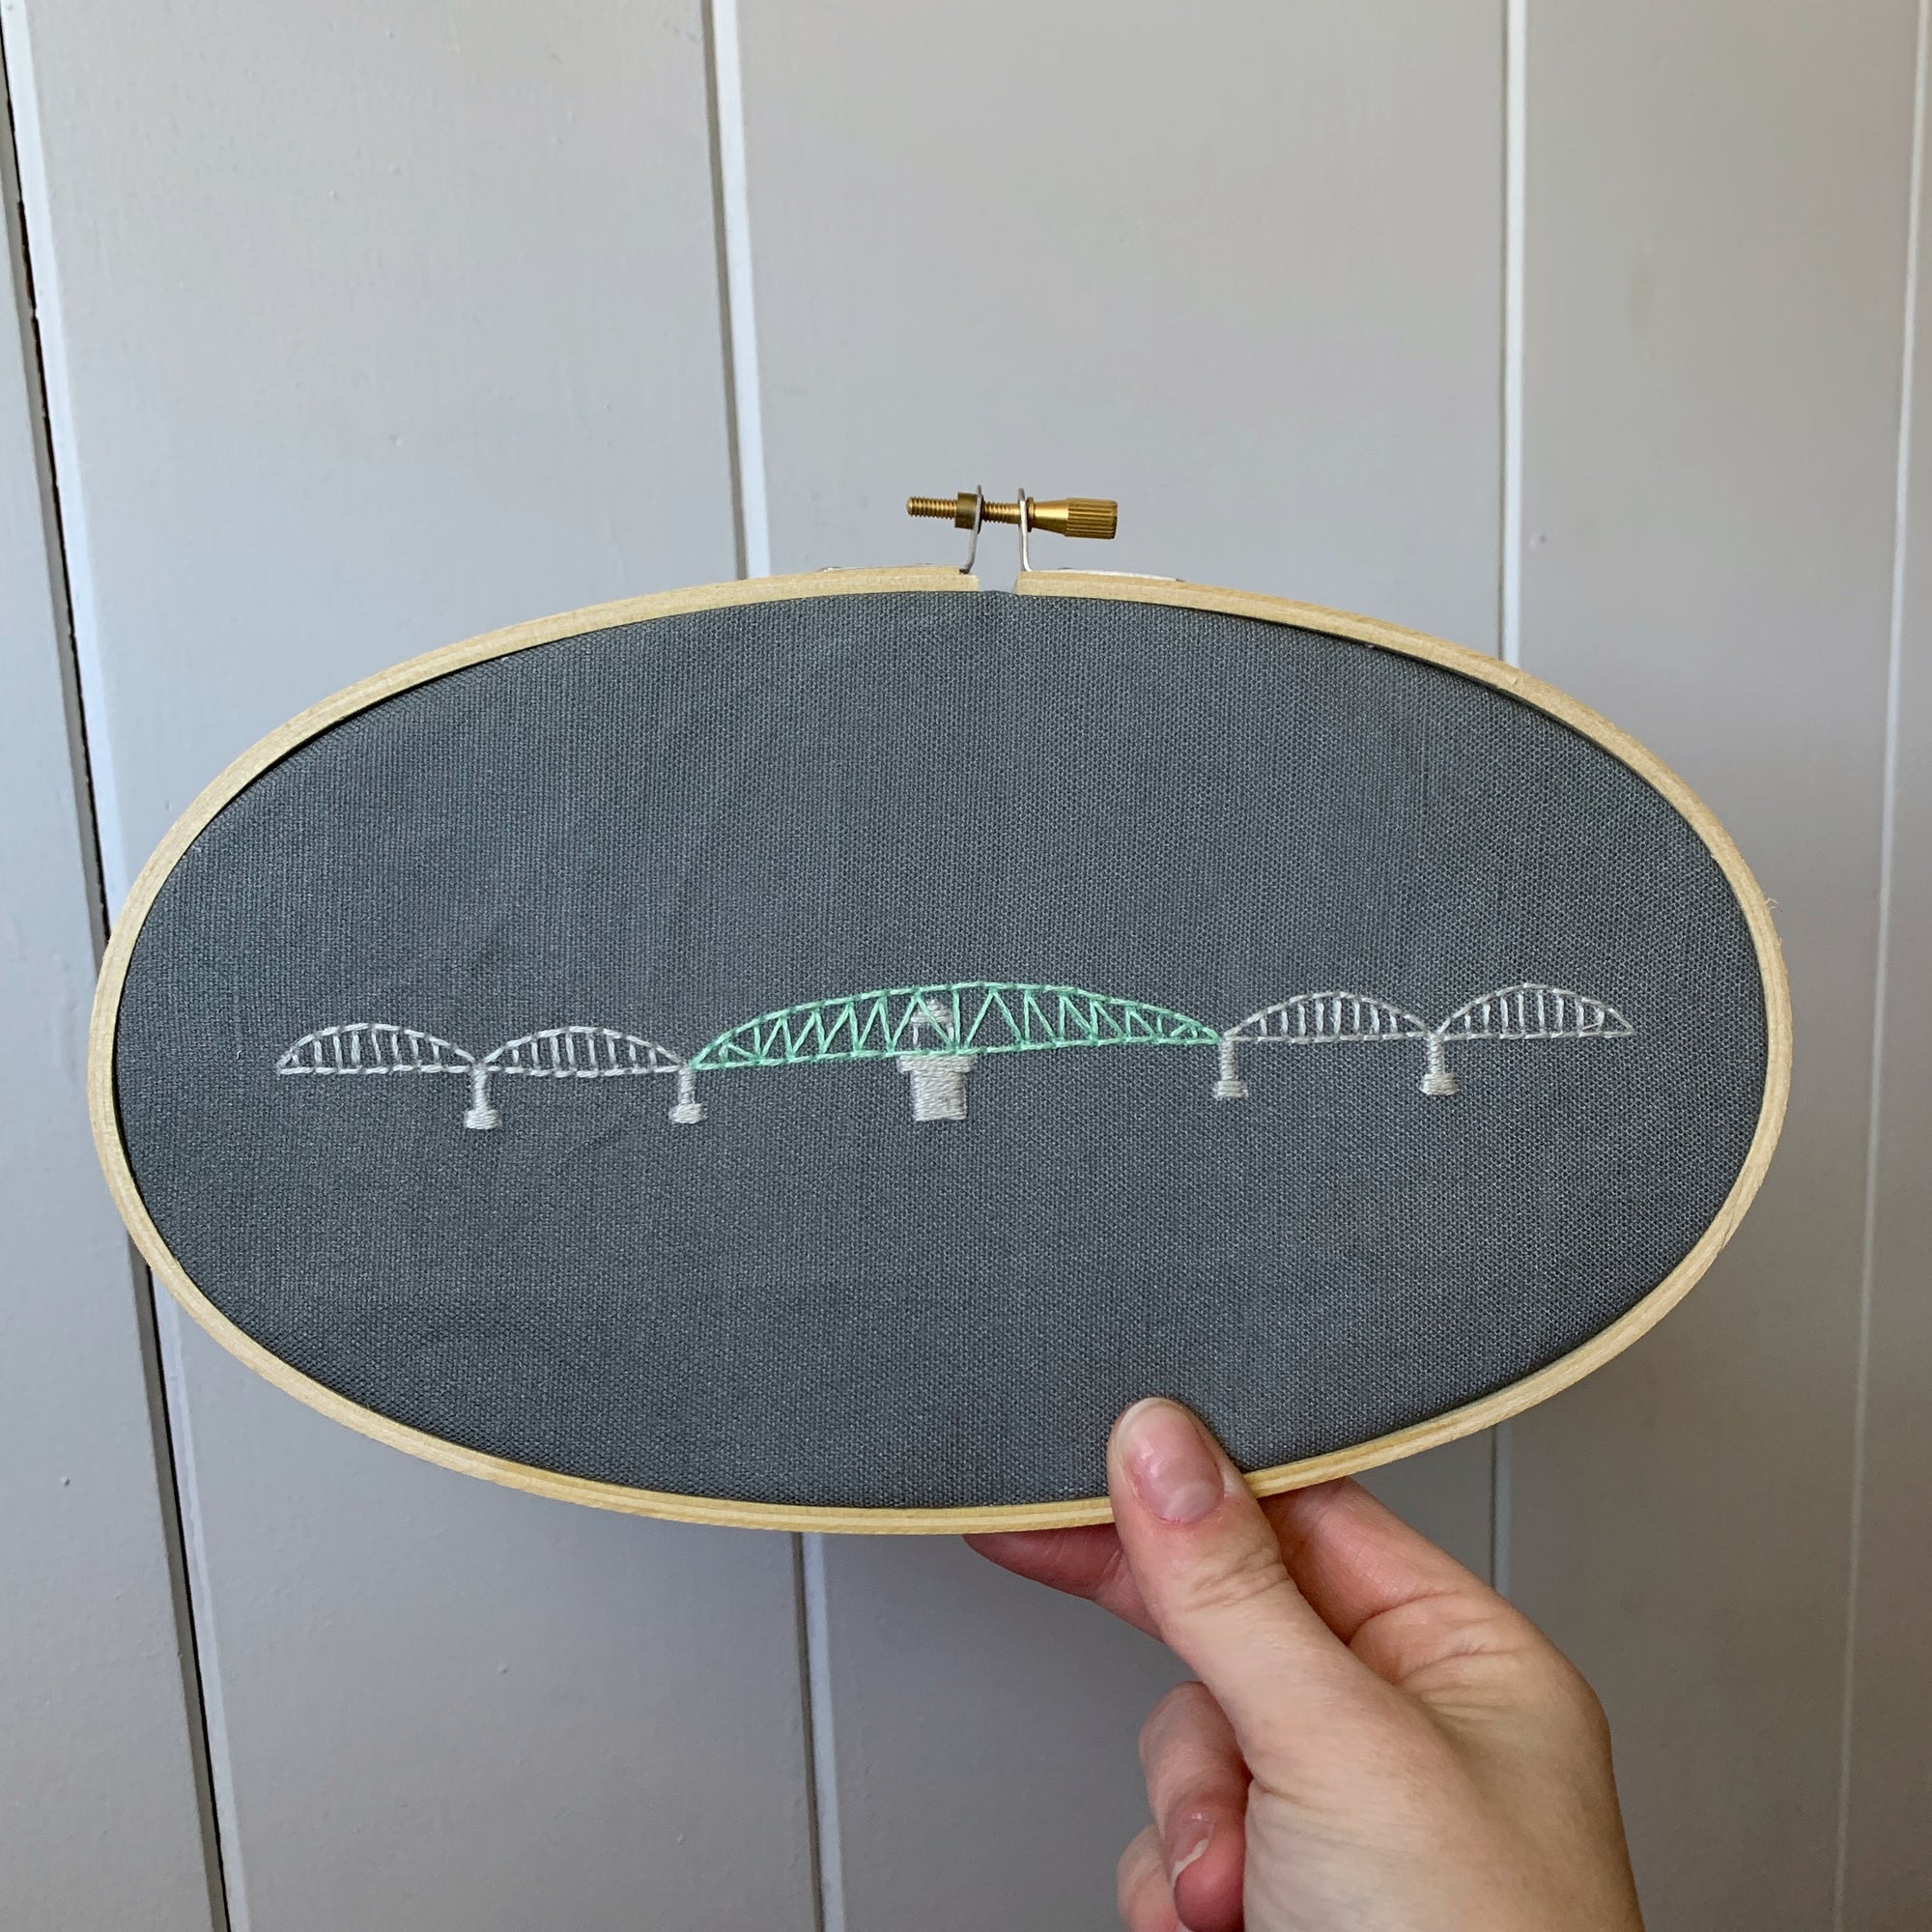 Umpqua River Bridge Embroidery Kit